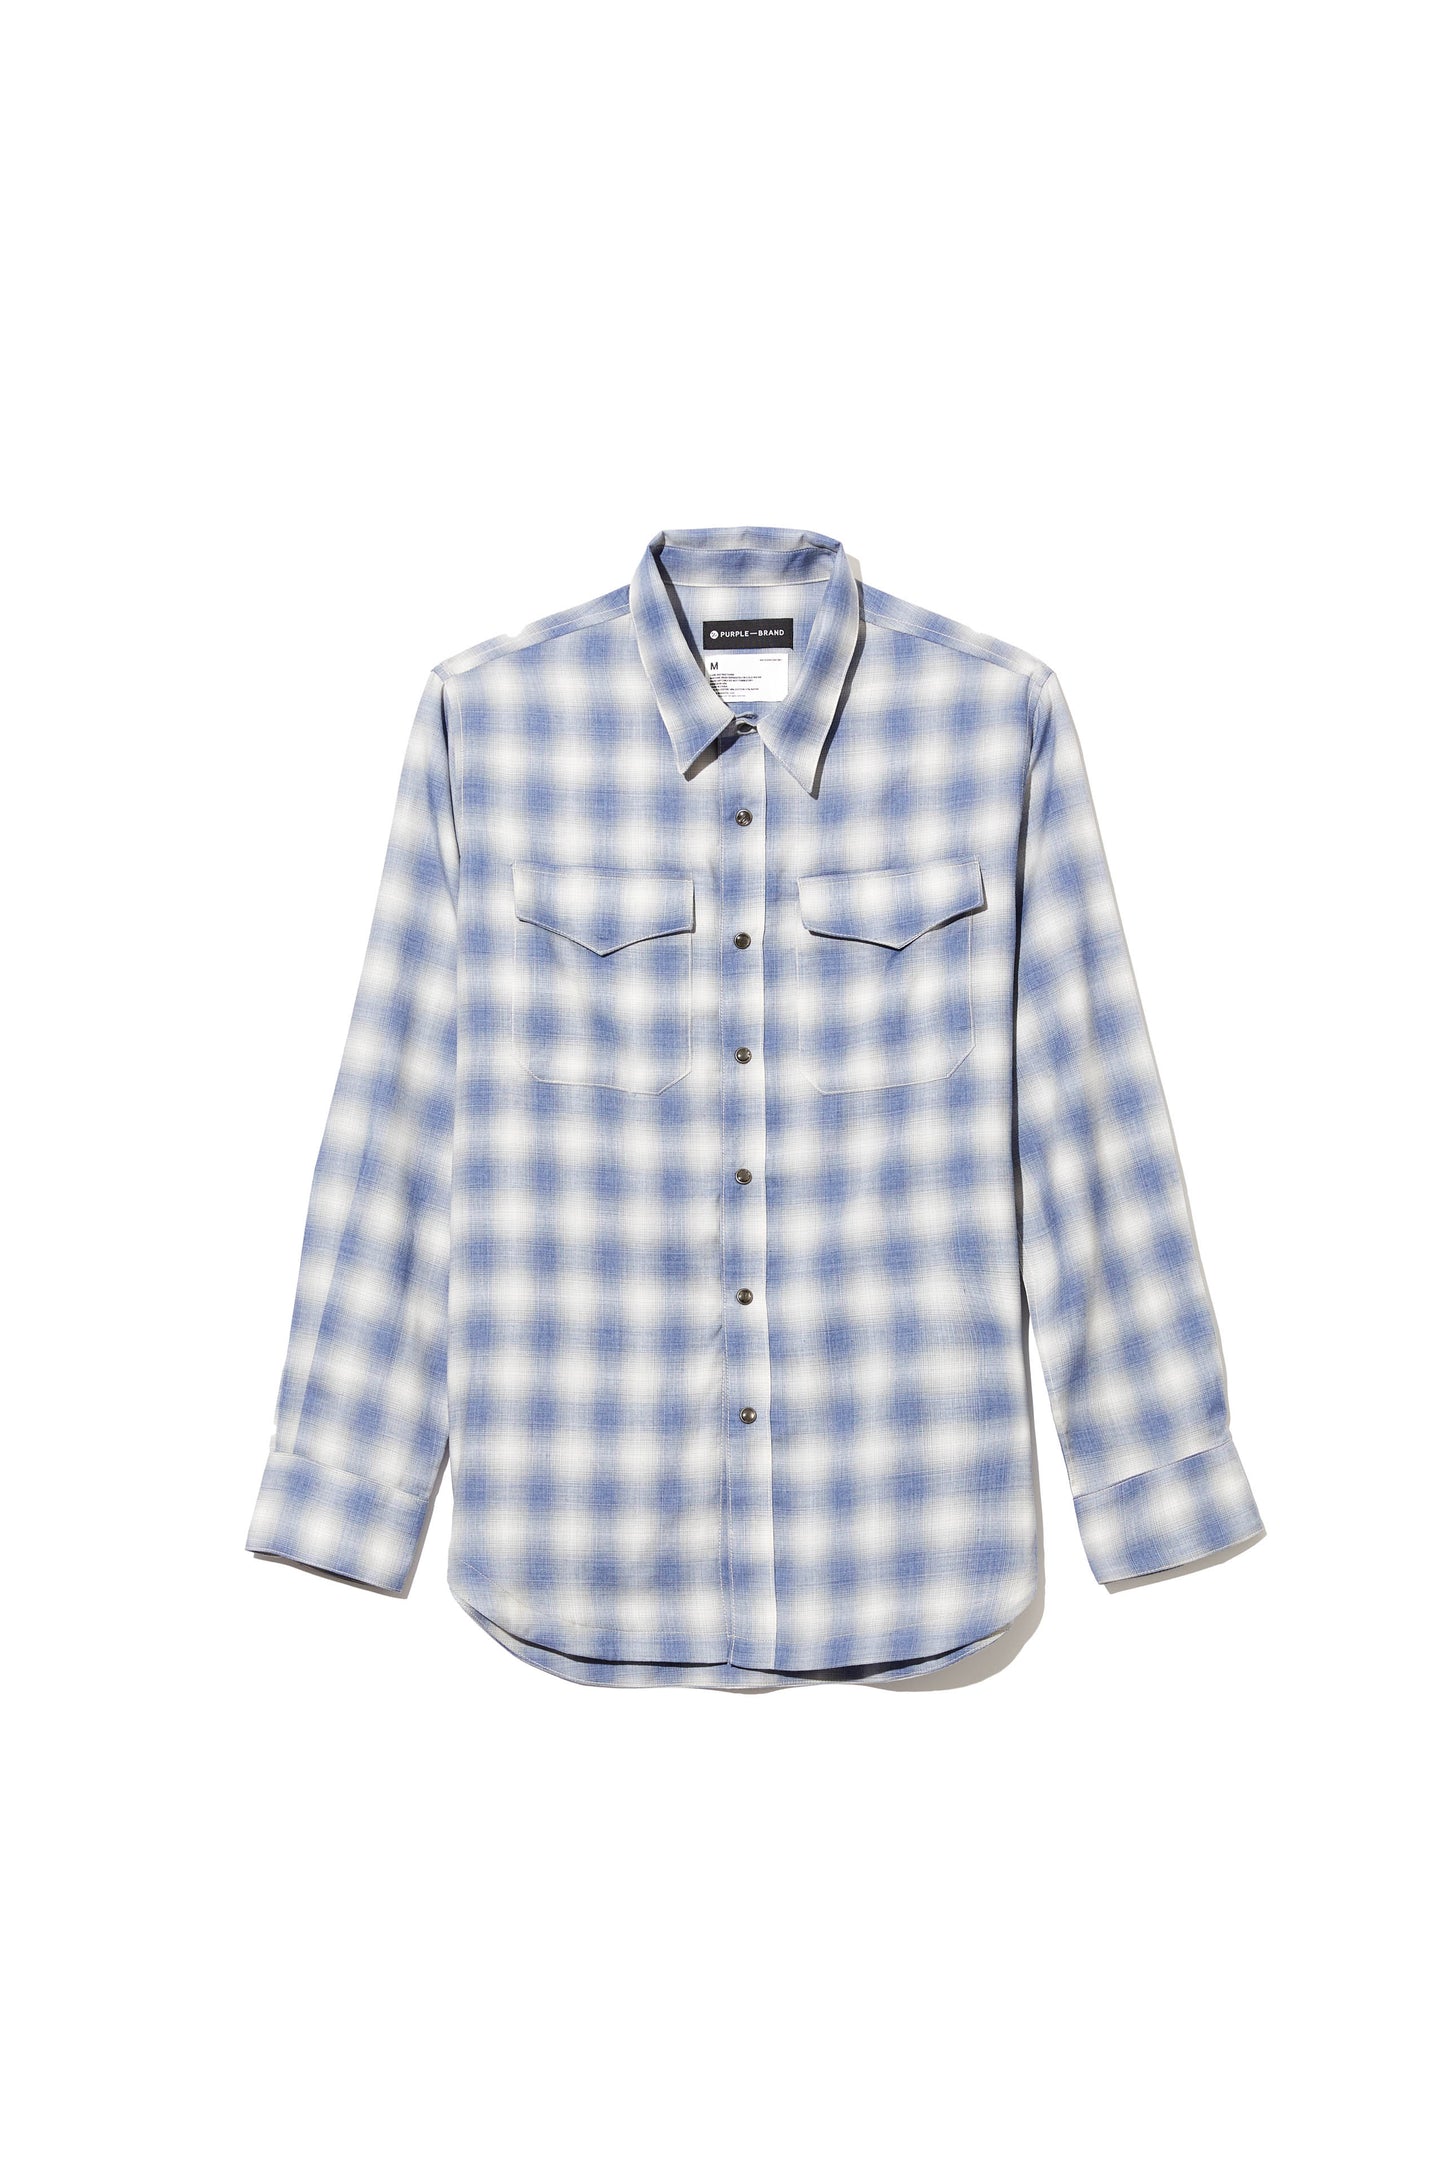 PURPLE BRAND - Men's Shirt - Style No. P301 - The Westwood Blue - Front